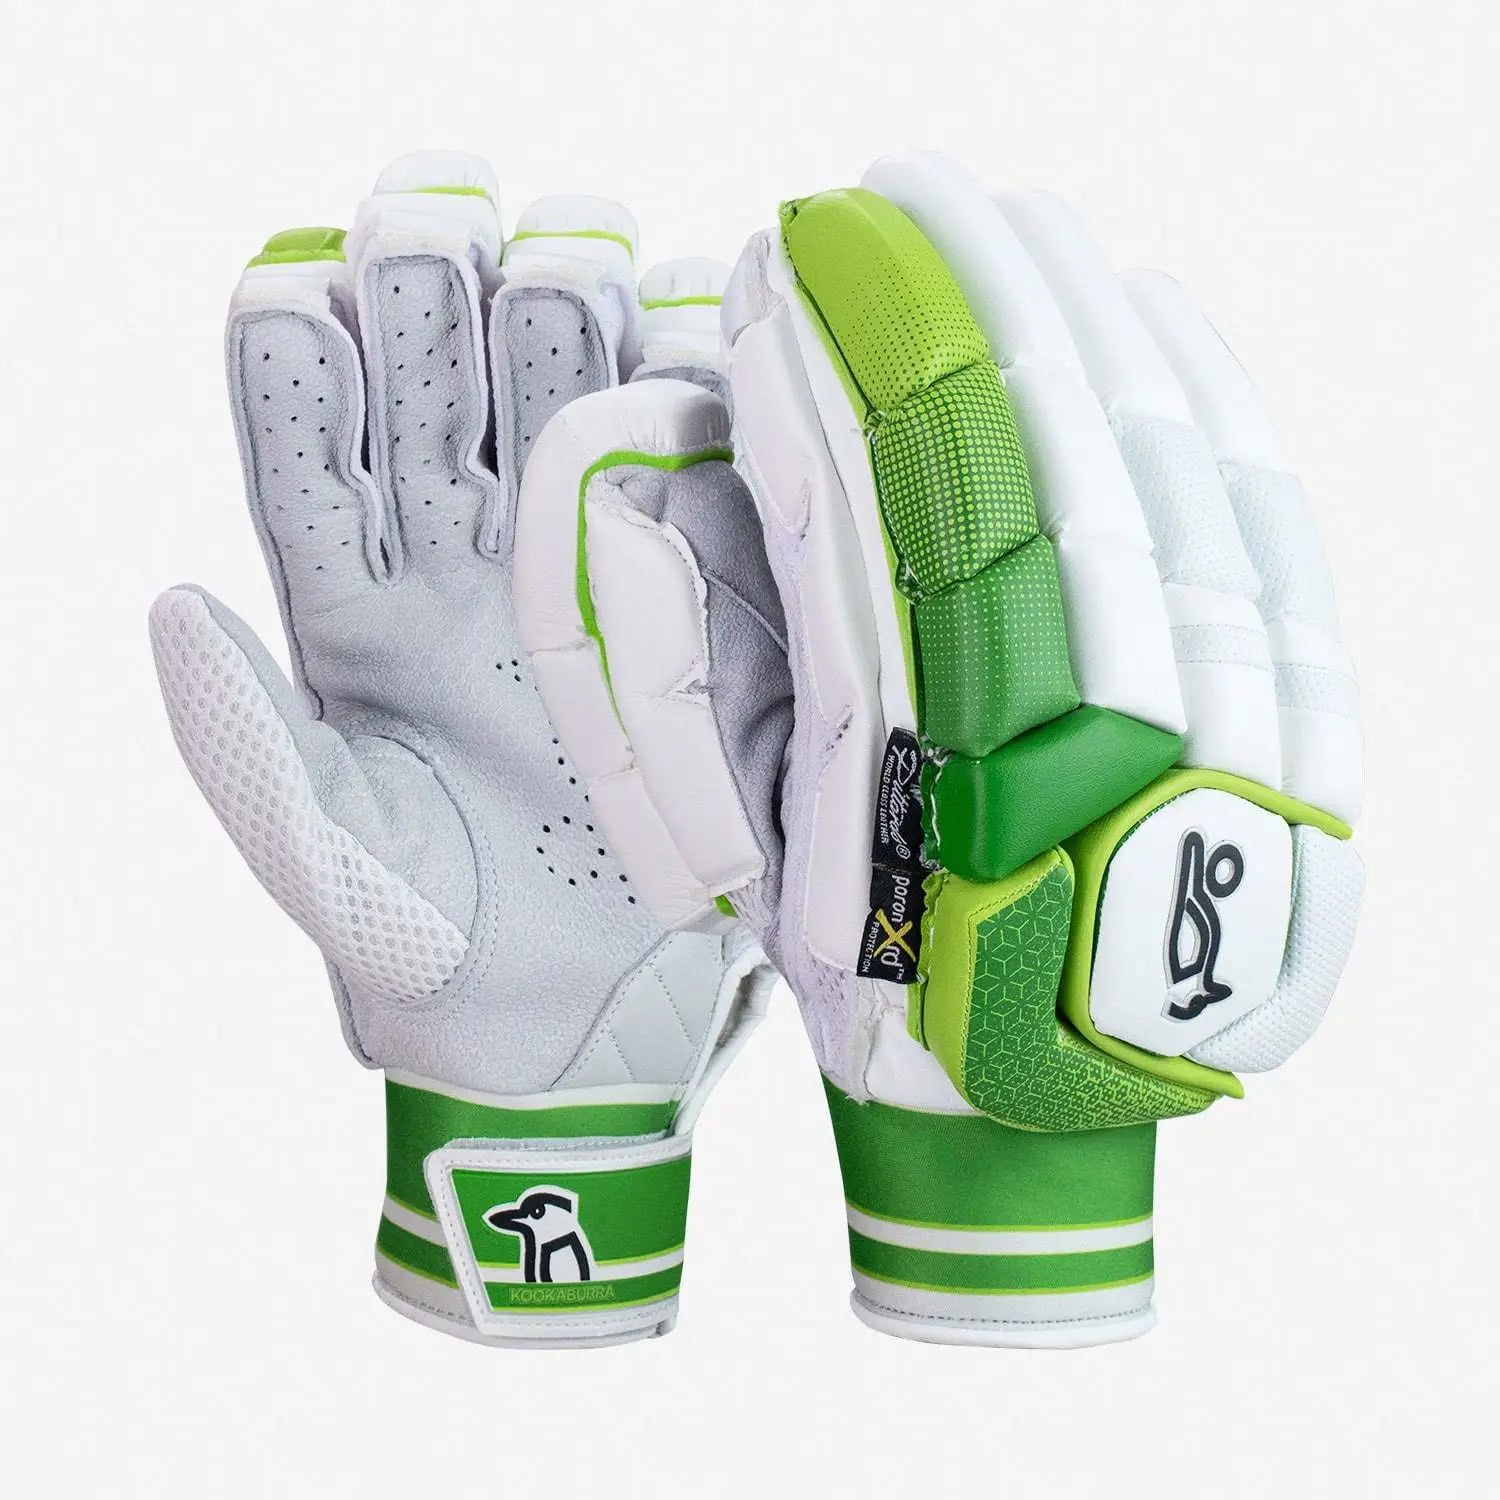 Kookaburra Kahuna Pro Cricket Batting Gloves Grade 1 Quality - Adult RH - GLOVE - BATTING